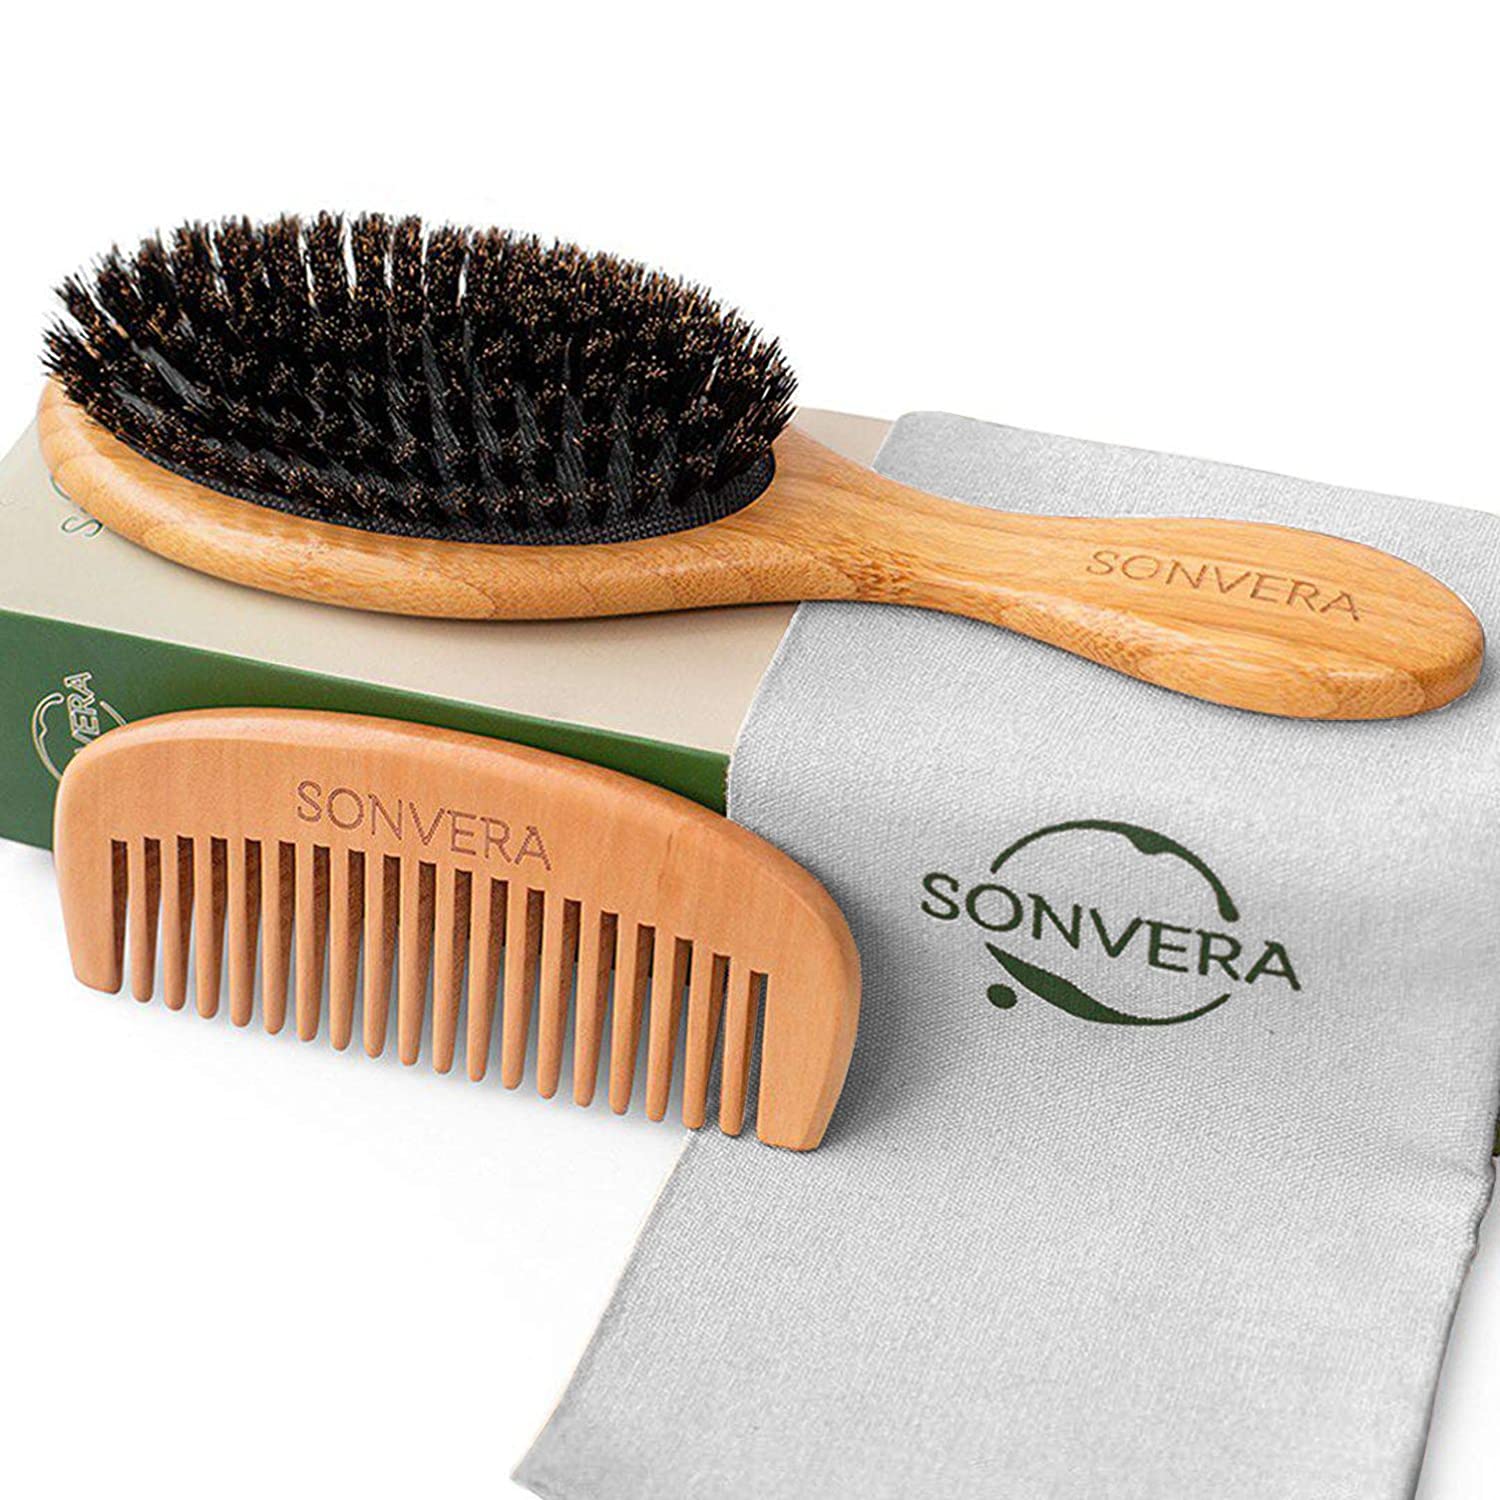 Belula 100% Boar Bristle Hair Brush Set. Soft Natural Bristles for